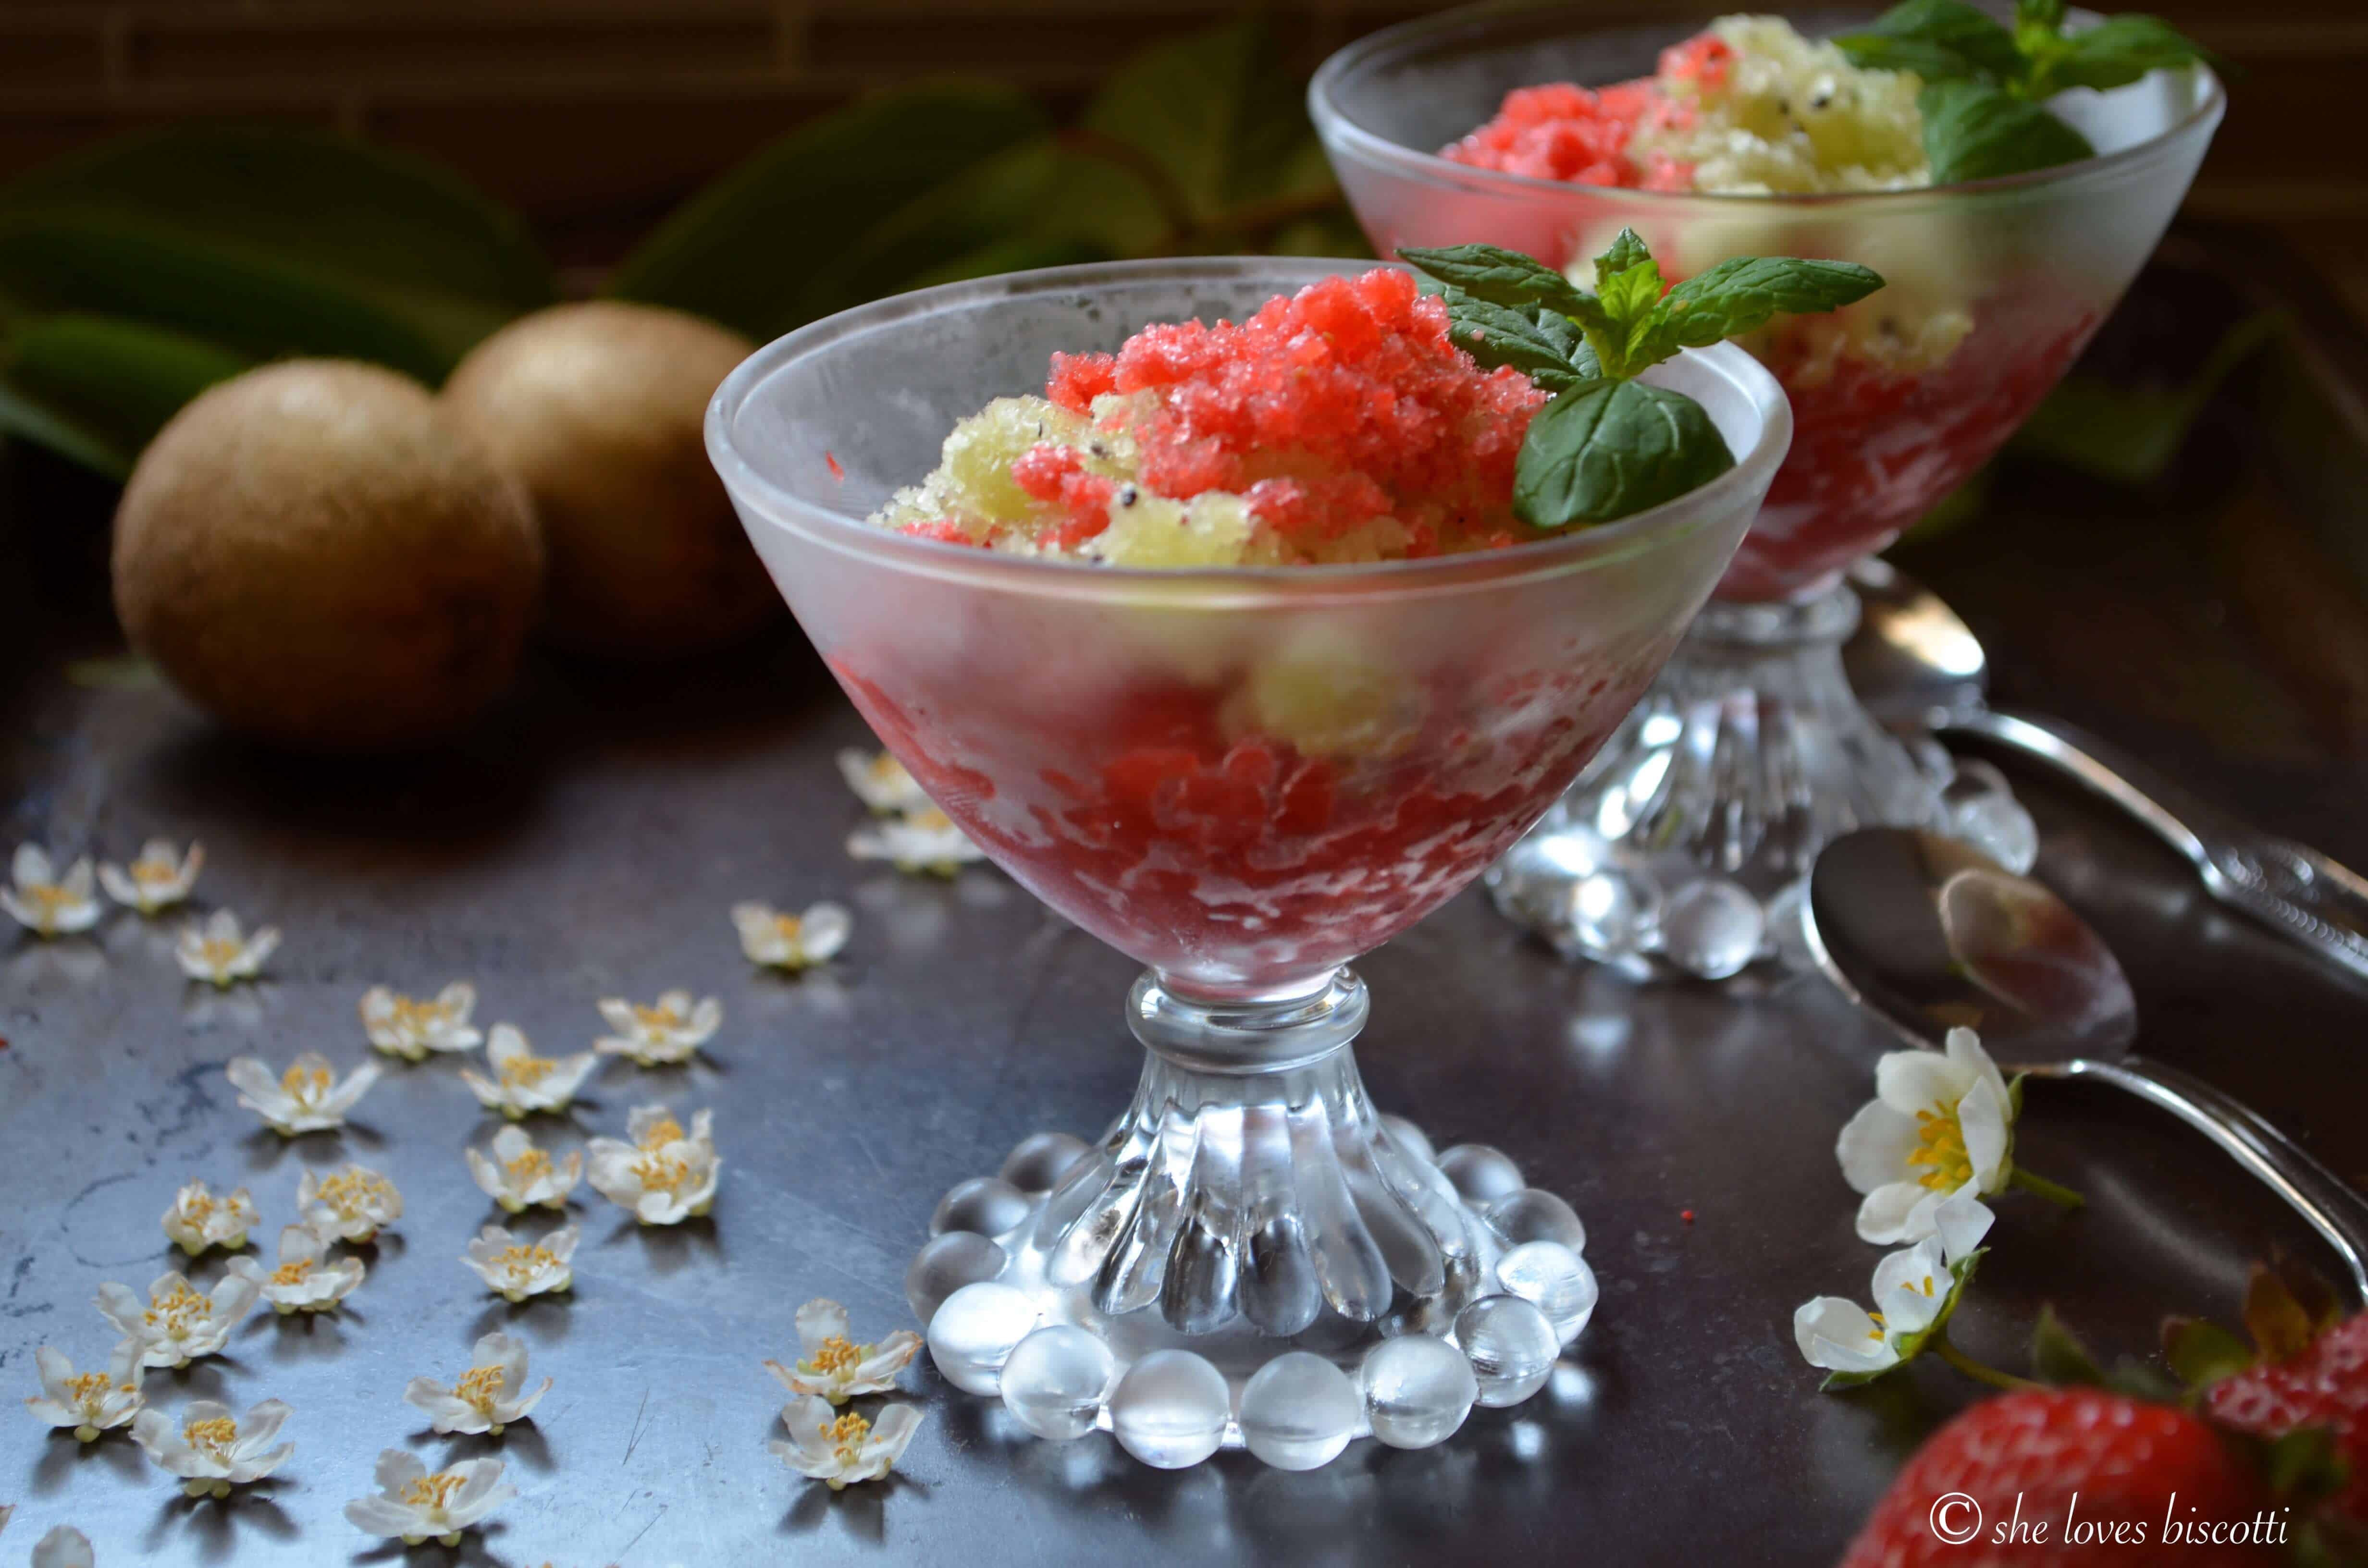 Kiwi granita in a bowl surrounded by kiwi flowers, kiwis and strawberries.